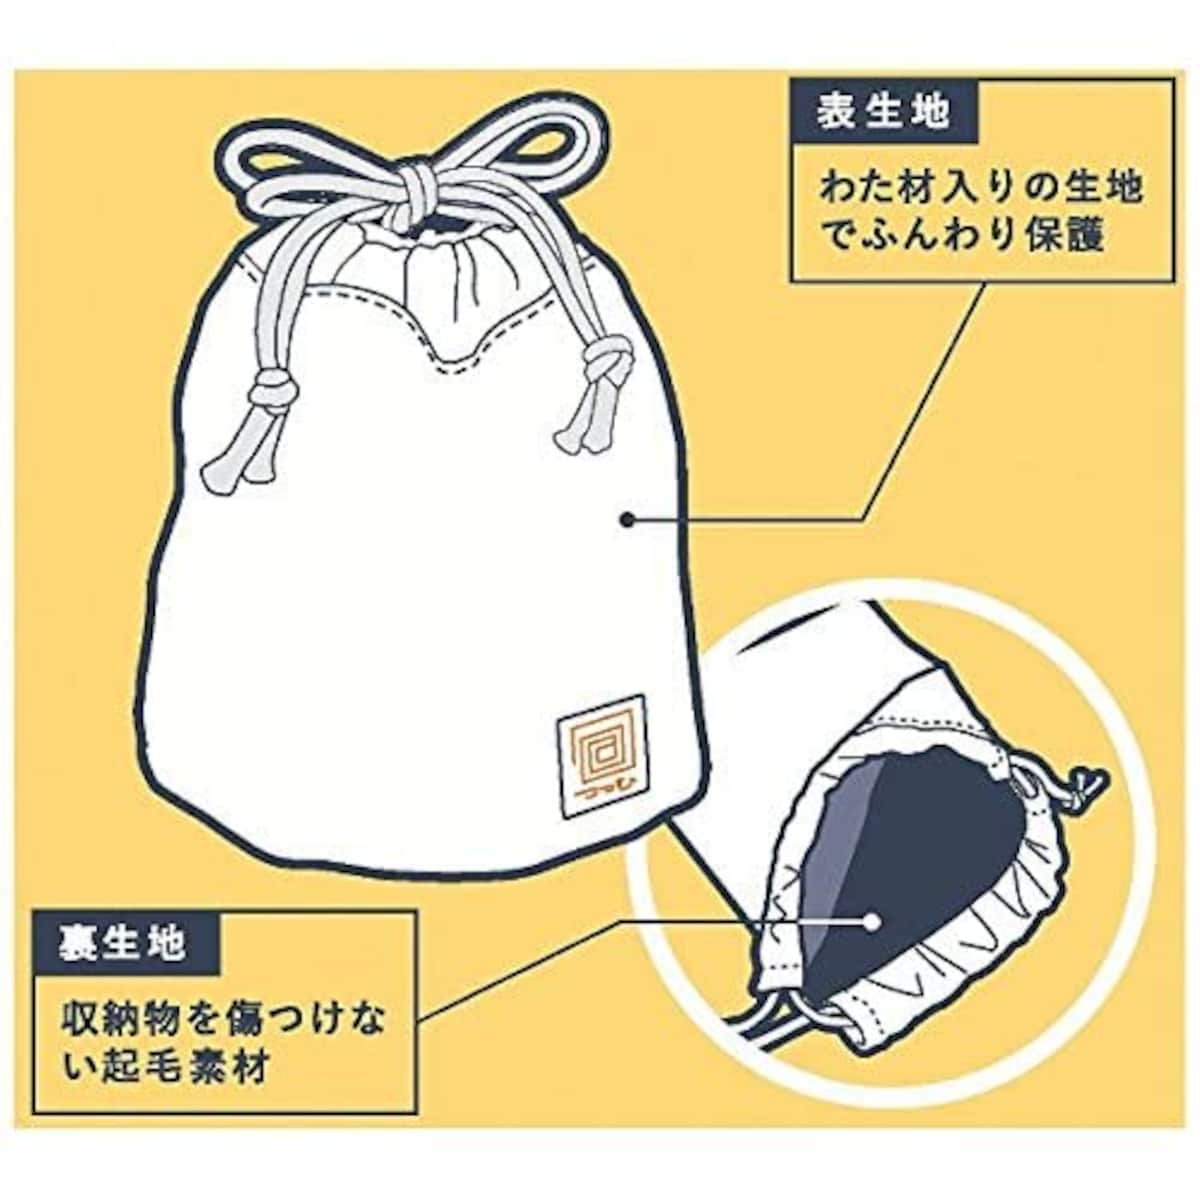  Kenko 汎用ポーチ 包 巾着ポーチ Mサイズ SUMI 811504画像3 